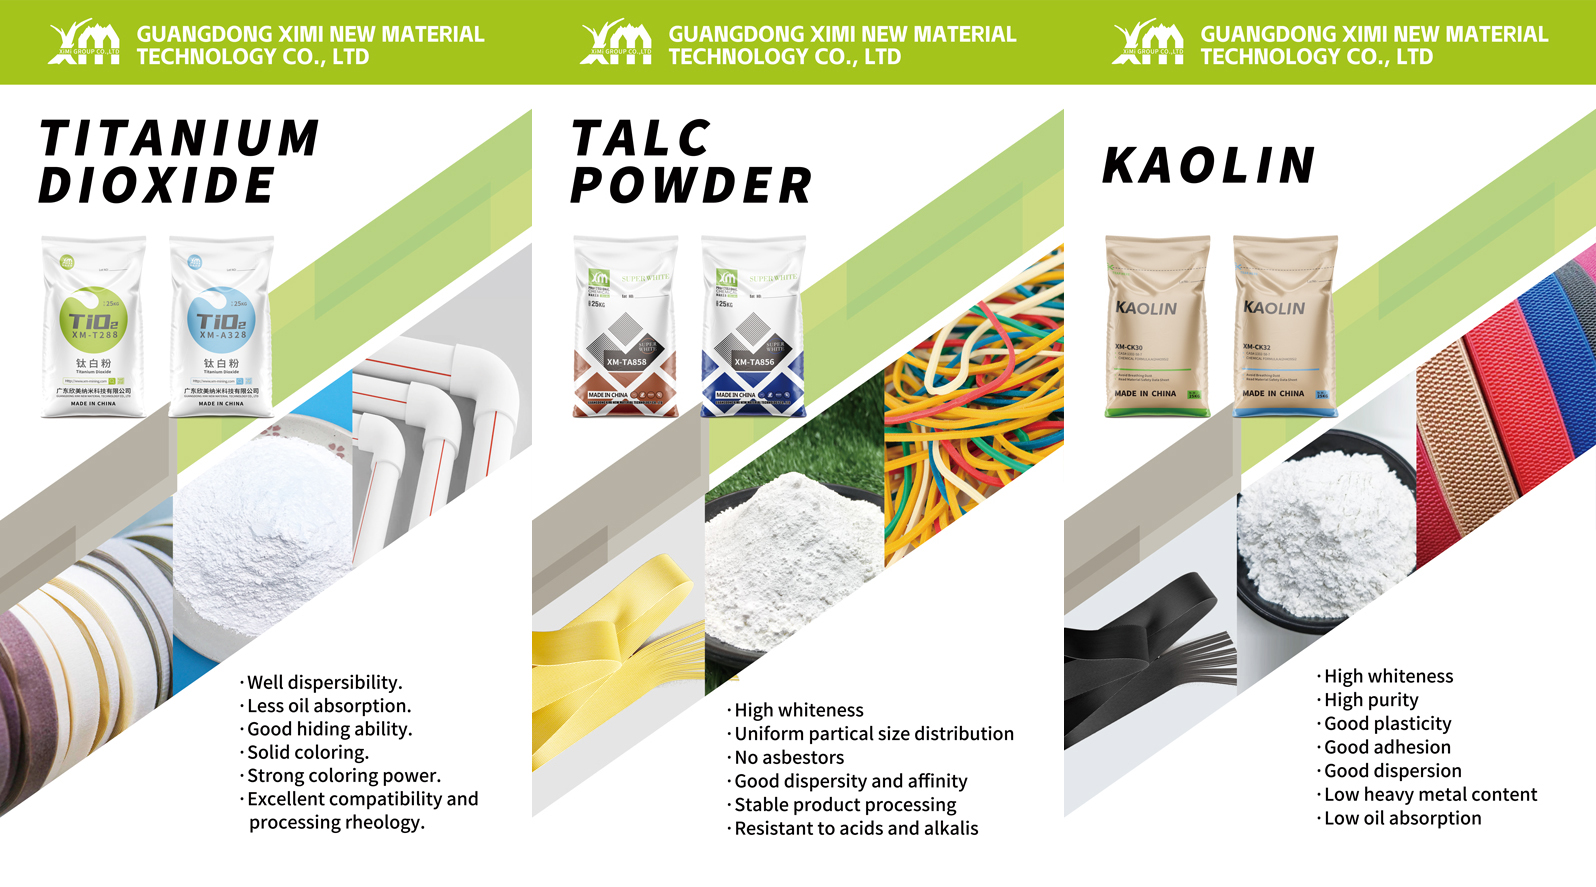 XiMi Product Brochure-Titanium Dioxide,TALC Powder, Kaolin